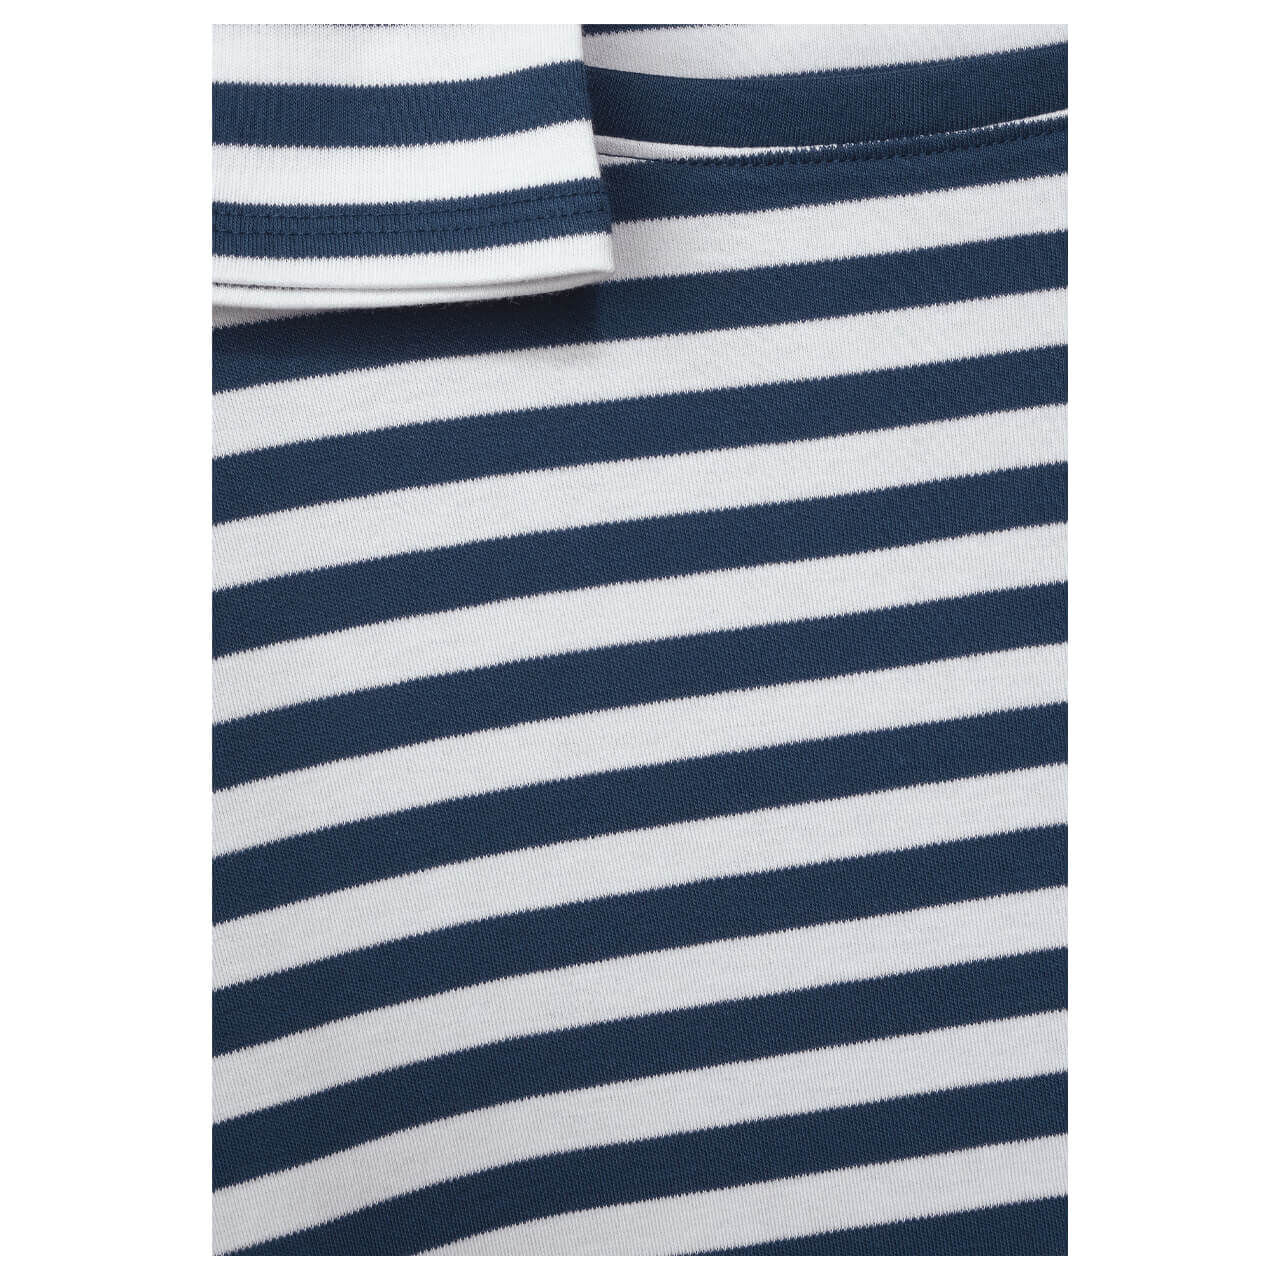 Cecil Basic Boatneck 3/4 Arm Shirt mid blue stripes